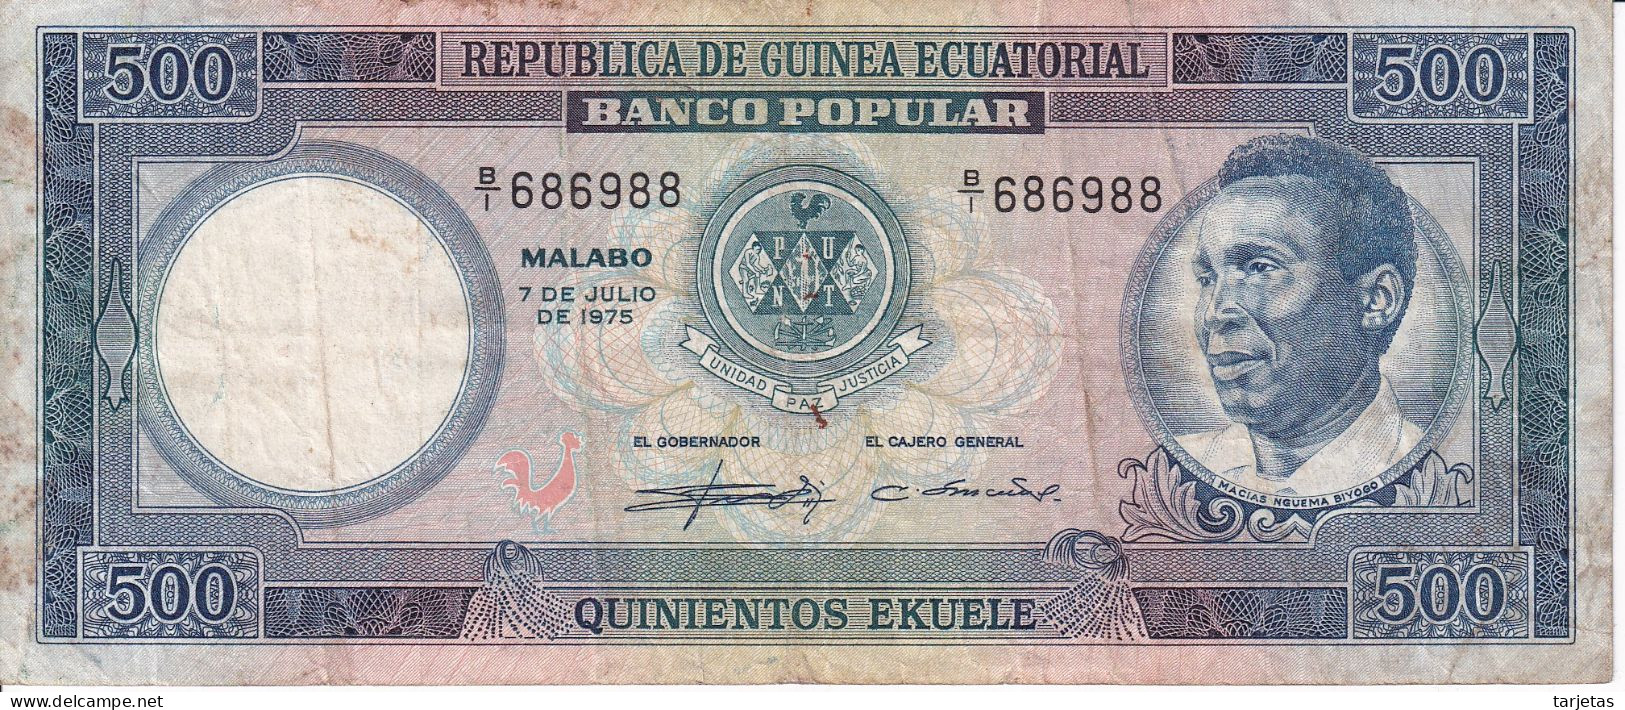 BILLETE DE GUINEA ECUATORIAL DE 500 EKUELE DEL AÑO 1975  (BANKNOTE) - Equatoriaal-Guinea